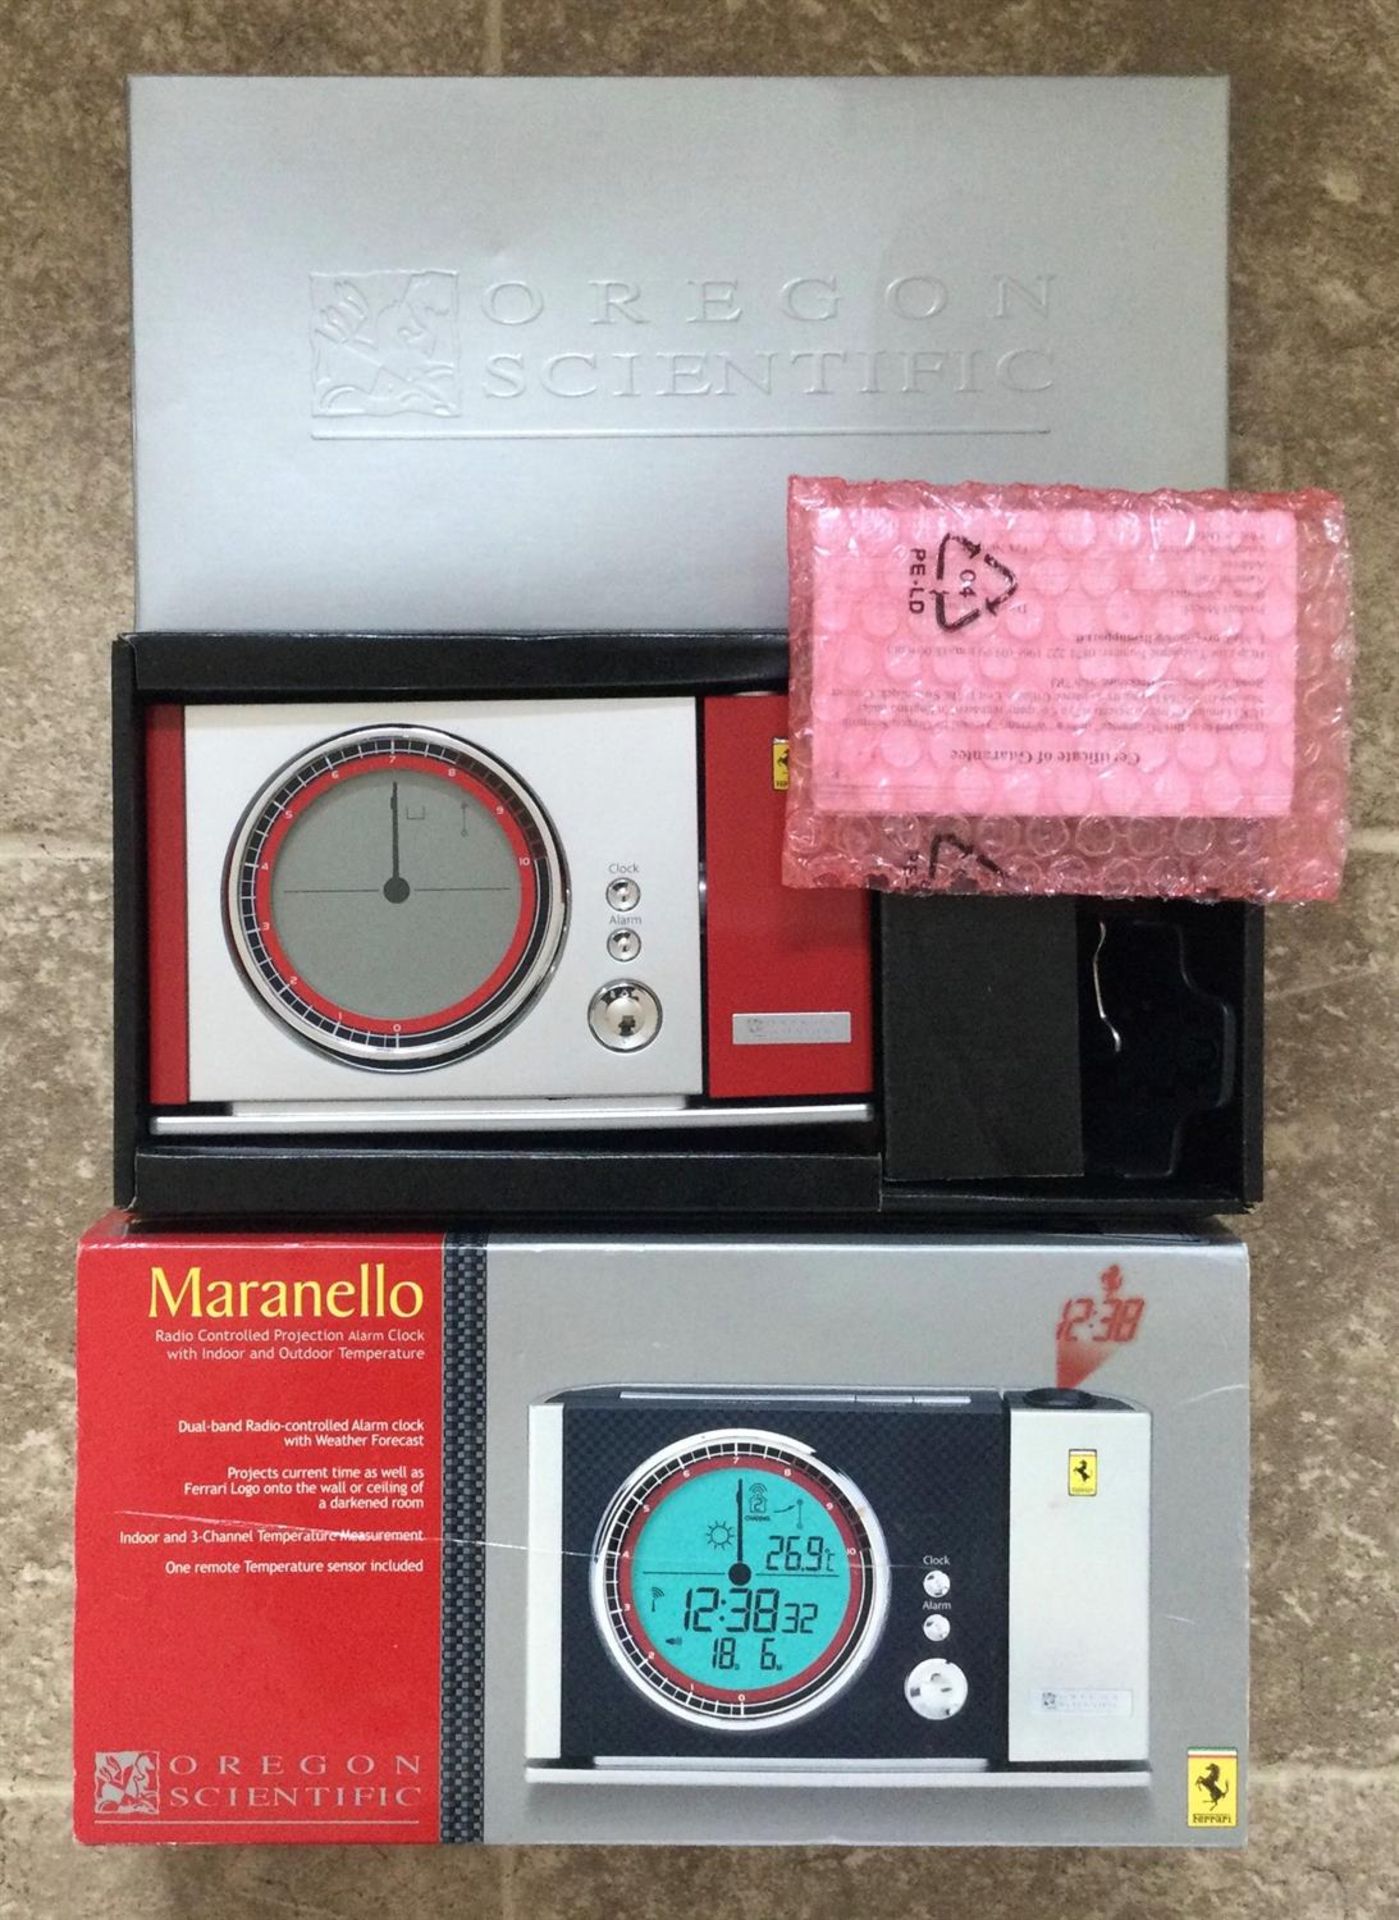 A Rare Maranello Ferrari-Badged Radio Controlled Projection Alarm Clock with Weather Forecast - Image 2 of 5